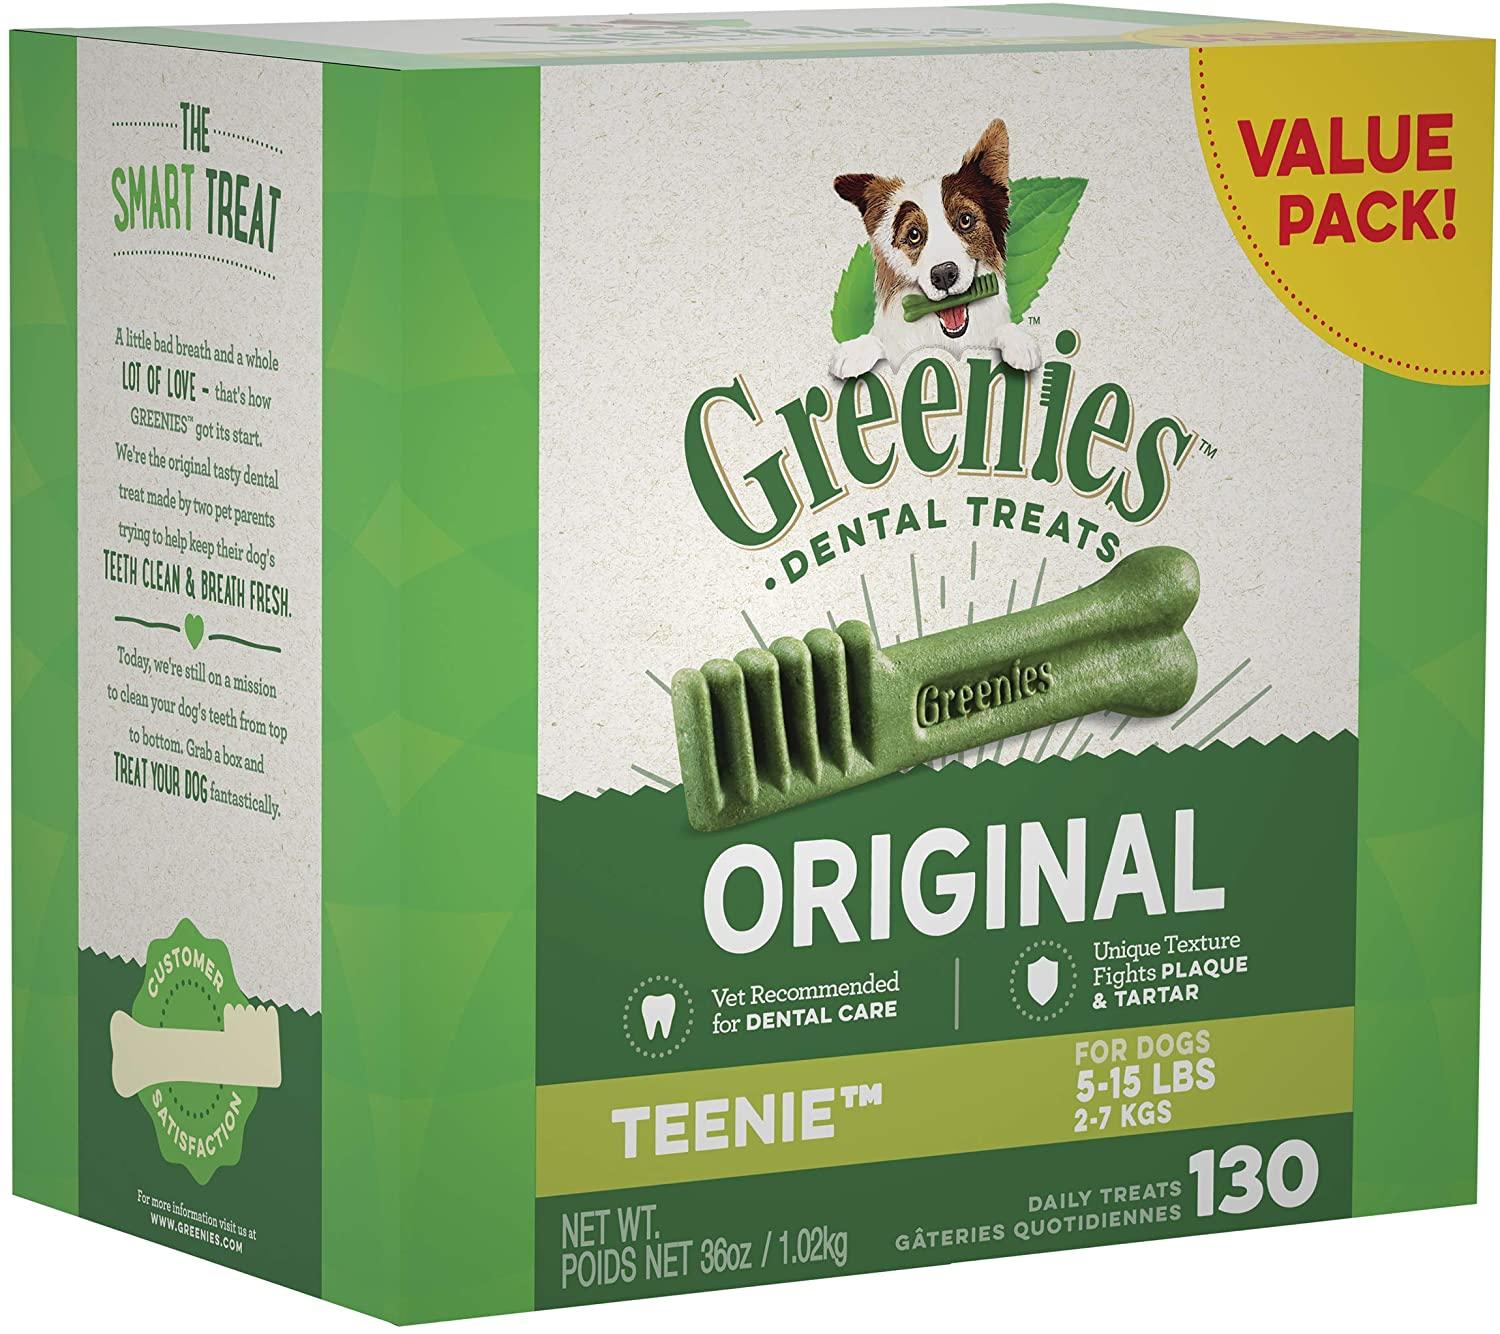 130 Greenies Teenie Dental Dog Treats for $15.65 Shipped